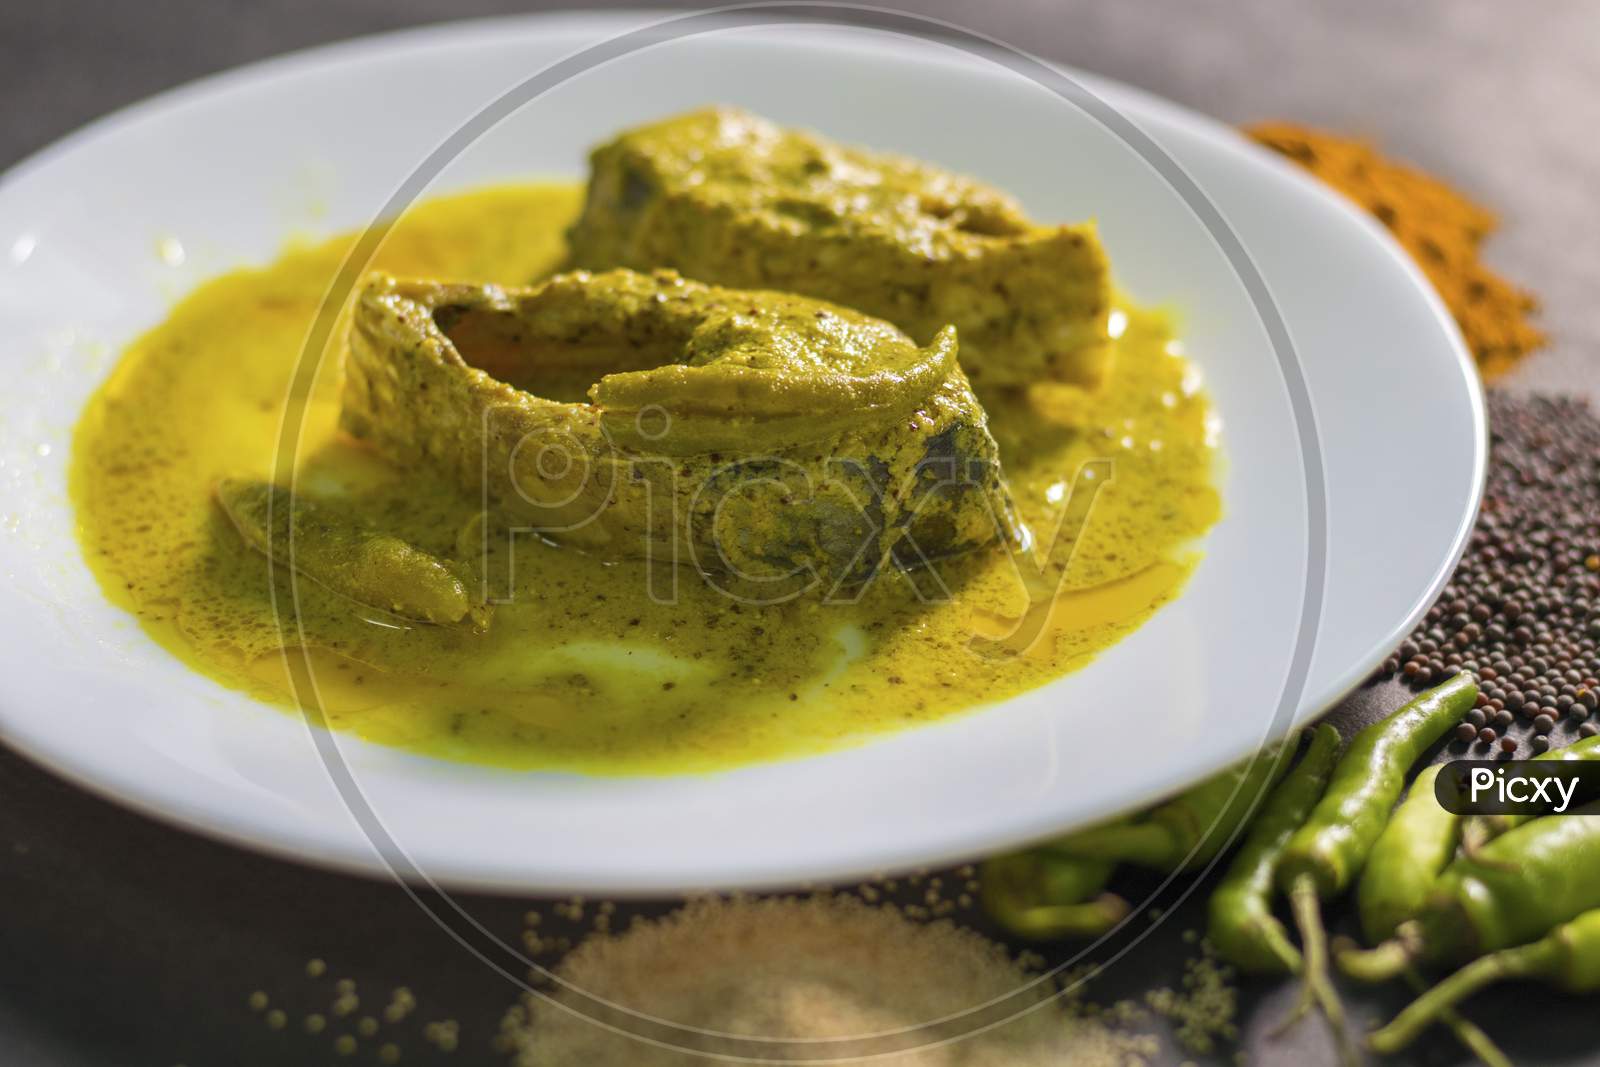 Famous Bengali Dish Hilsa/Ilish fish with poppy and mustard seed recipe.